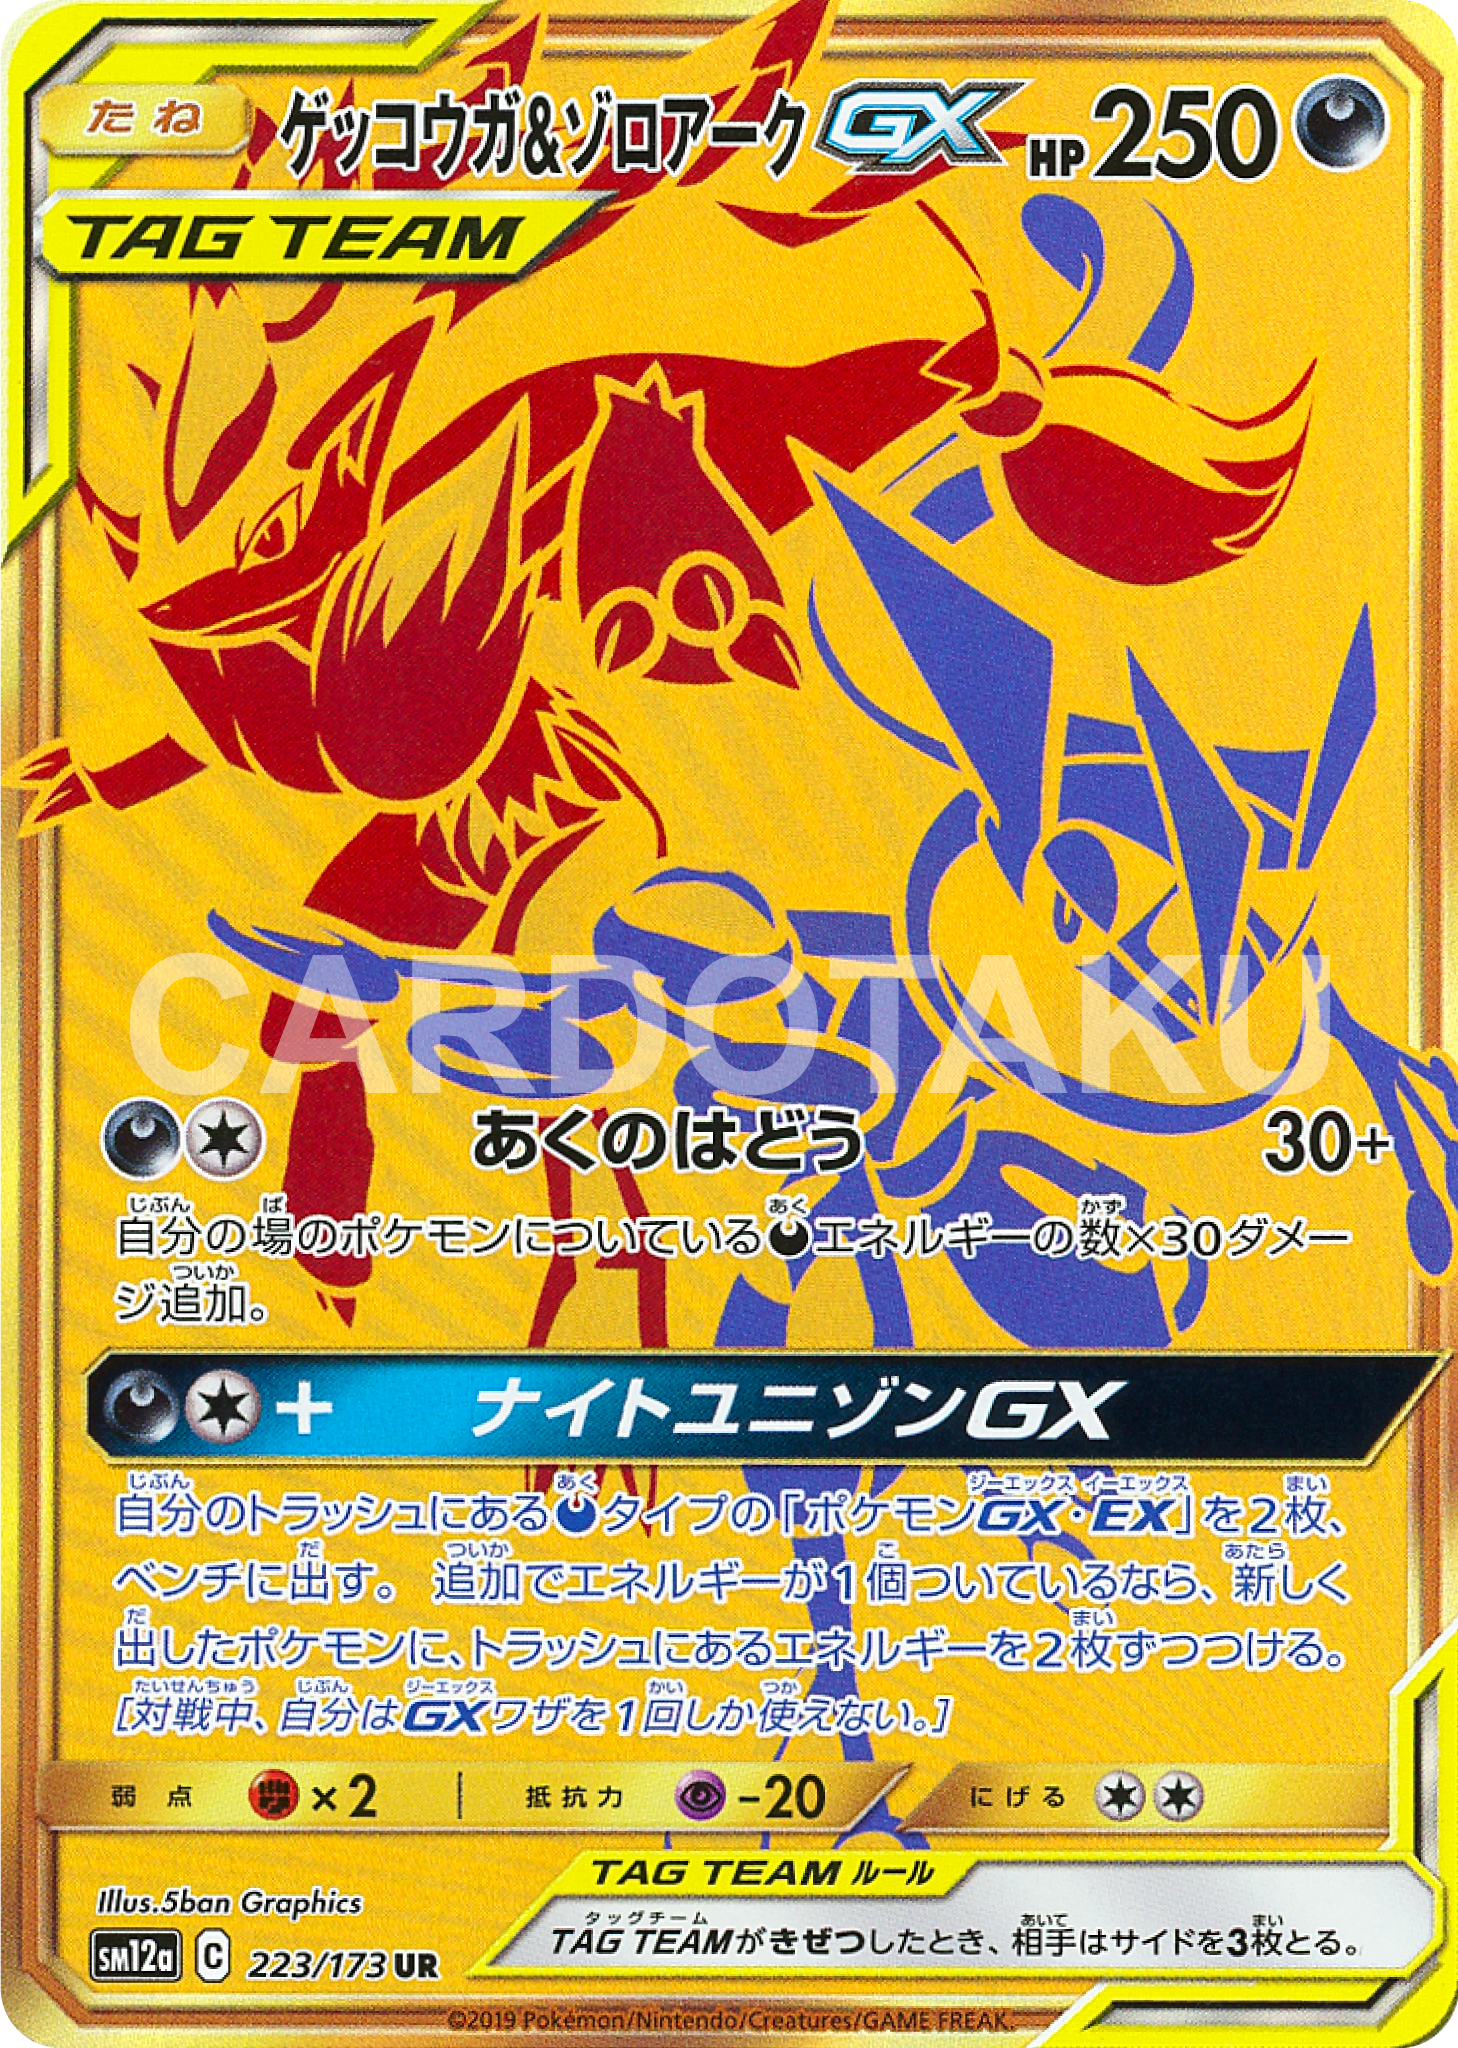 Pokémon Card Game SM12a 223/173 UR